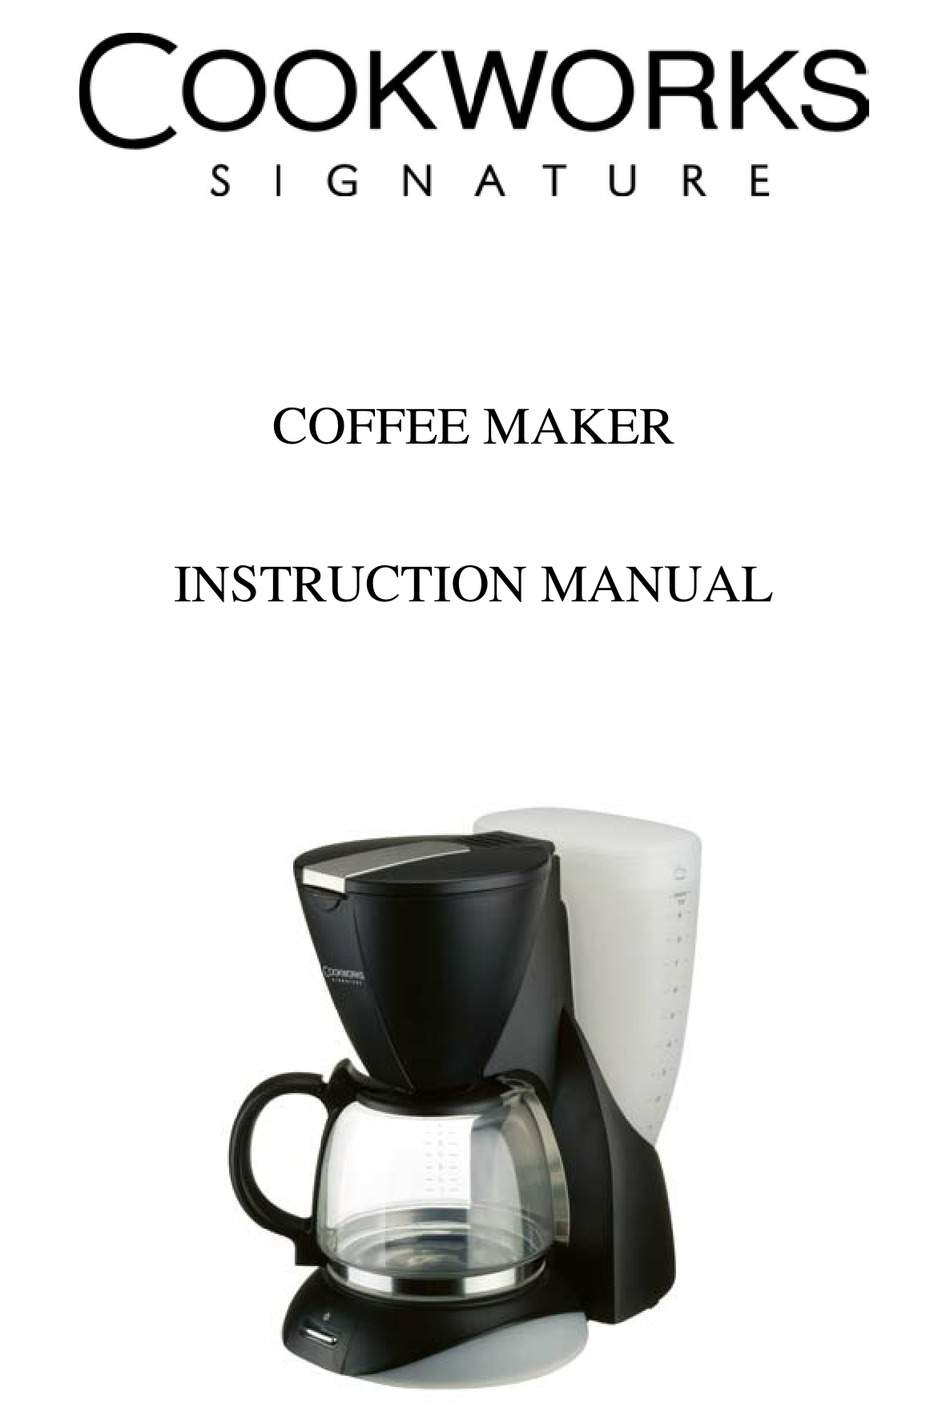 https://data2.manualslib.com/first-image/i19/91/9041/904009/cookworks-signature-coffee-maker.jpg